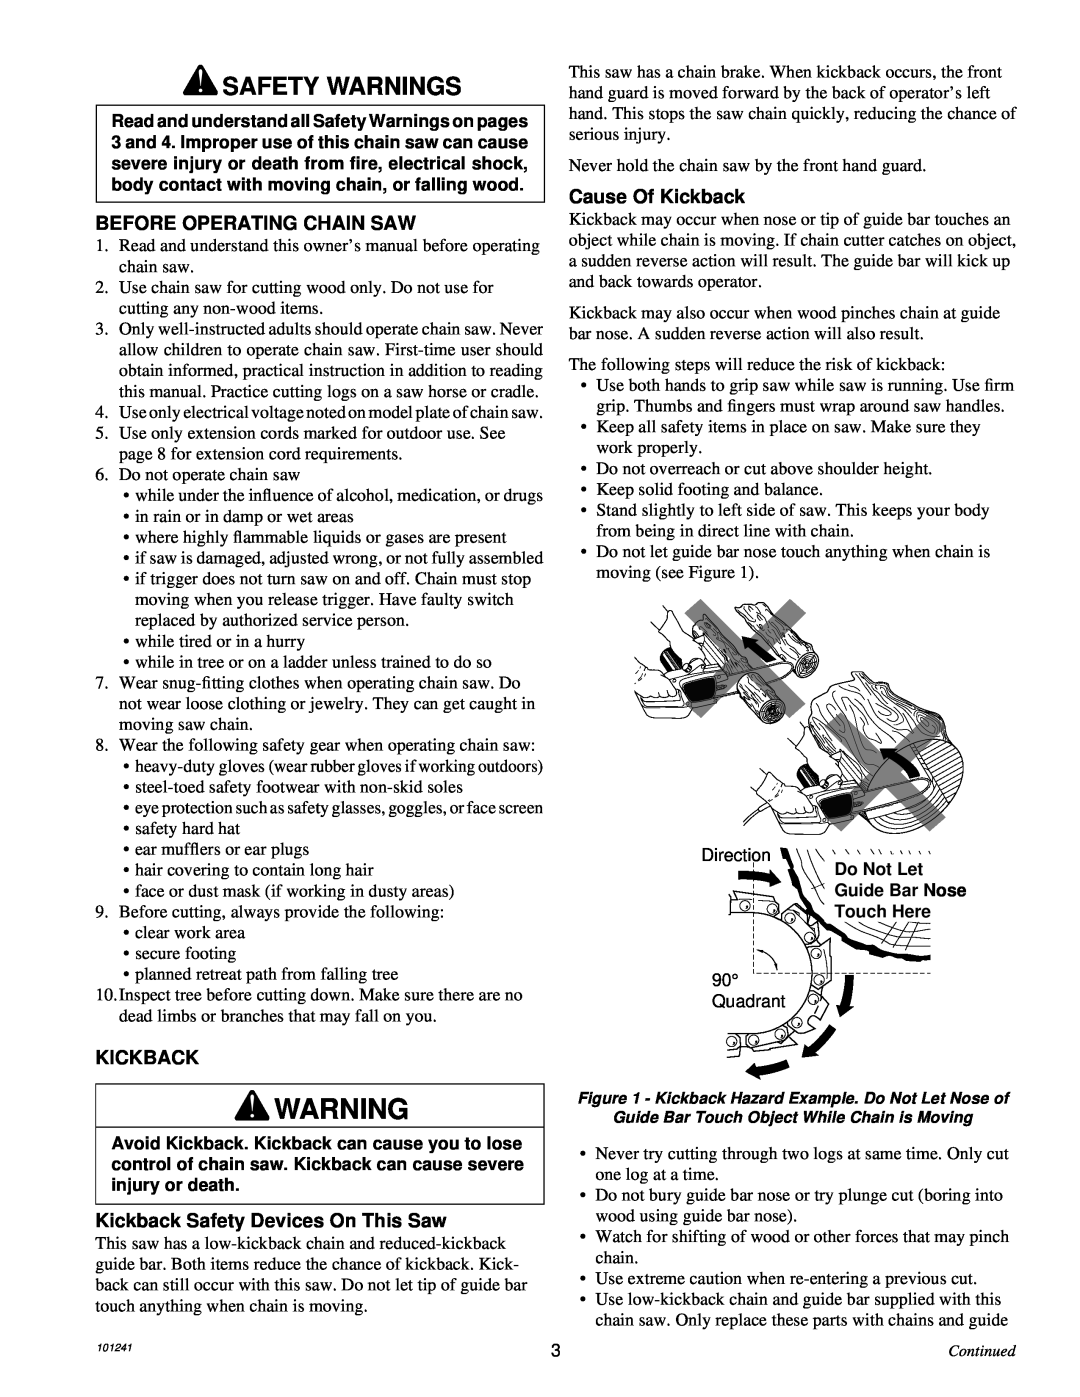 Remington 100582-01, 100582-02, EL-7B owner manual Safety Warnings, Before Operating Chain Saw, Cause Of Kickback 